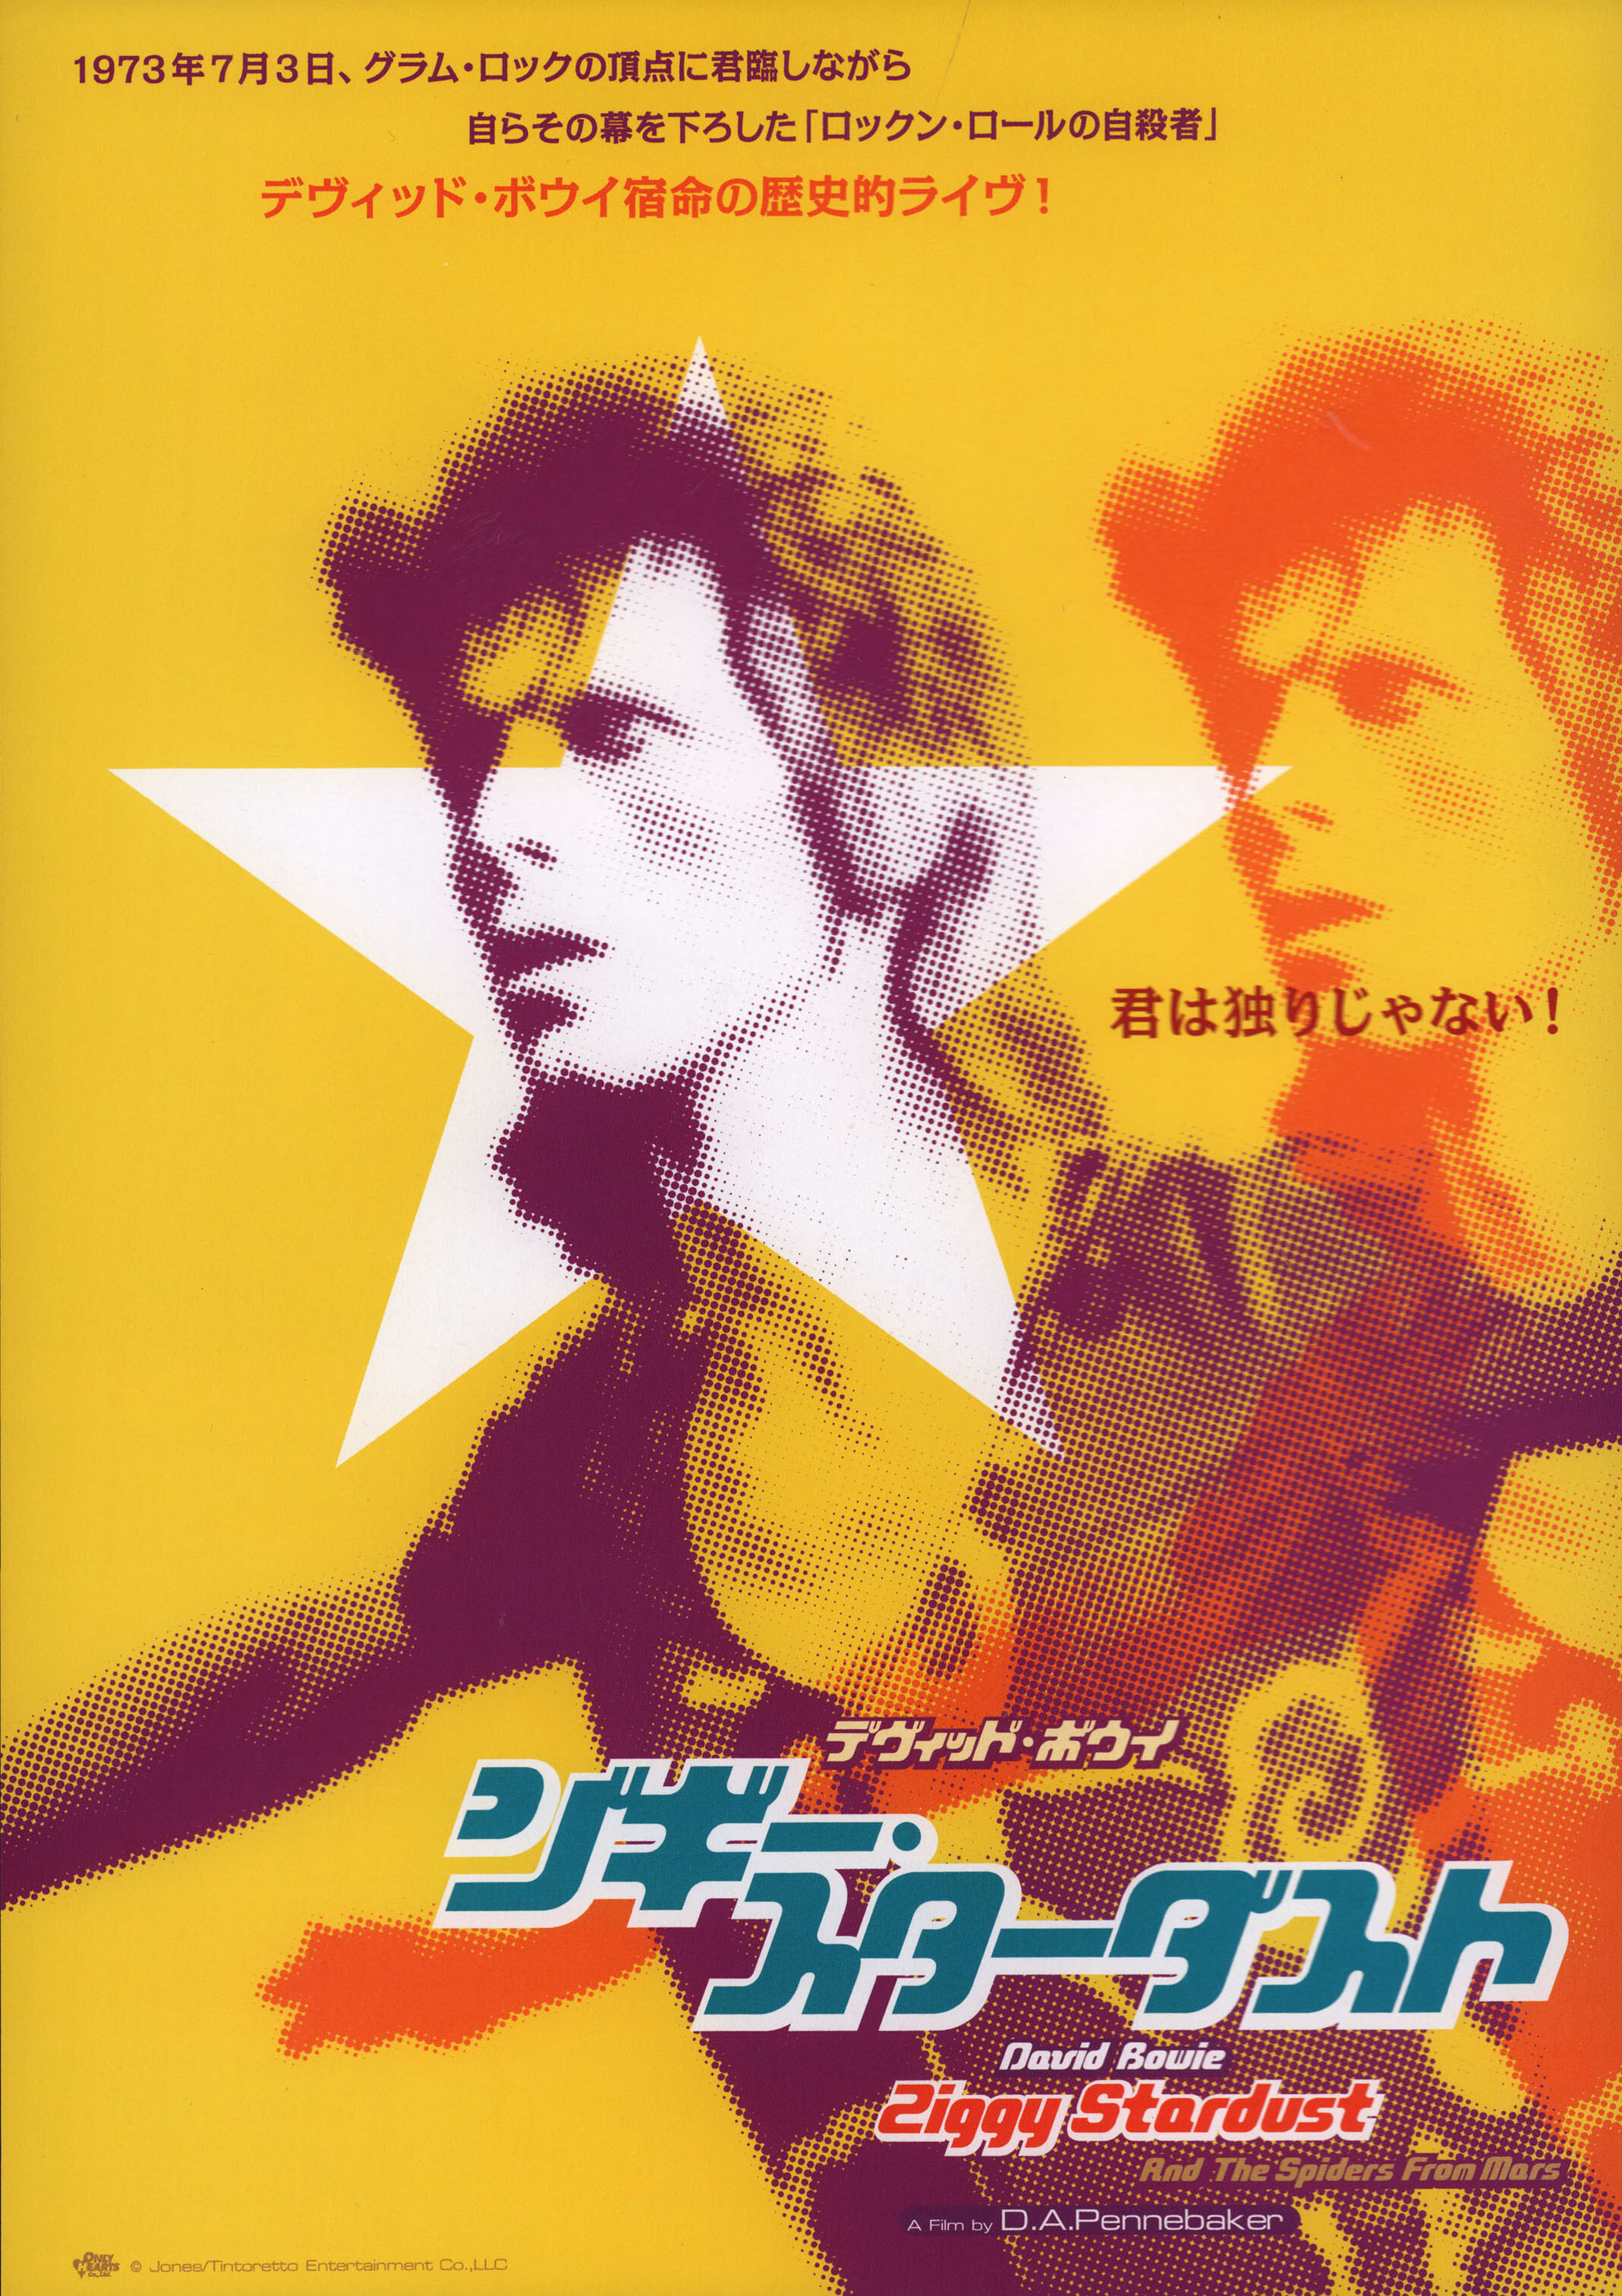 Зигги Стардаст и пауки с Марса (Ziggy Stardust and the Spiders from Mars, 1979), режиссёр Д.А. Пеннебейкер, японский постер к фильму (графический дизайн, 2017 год)_1